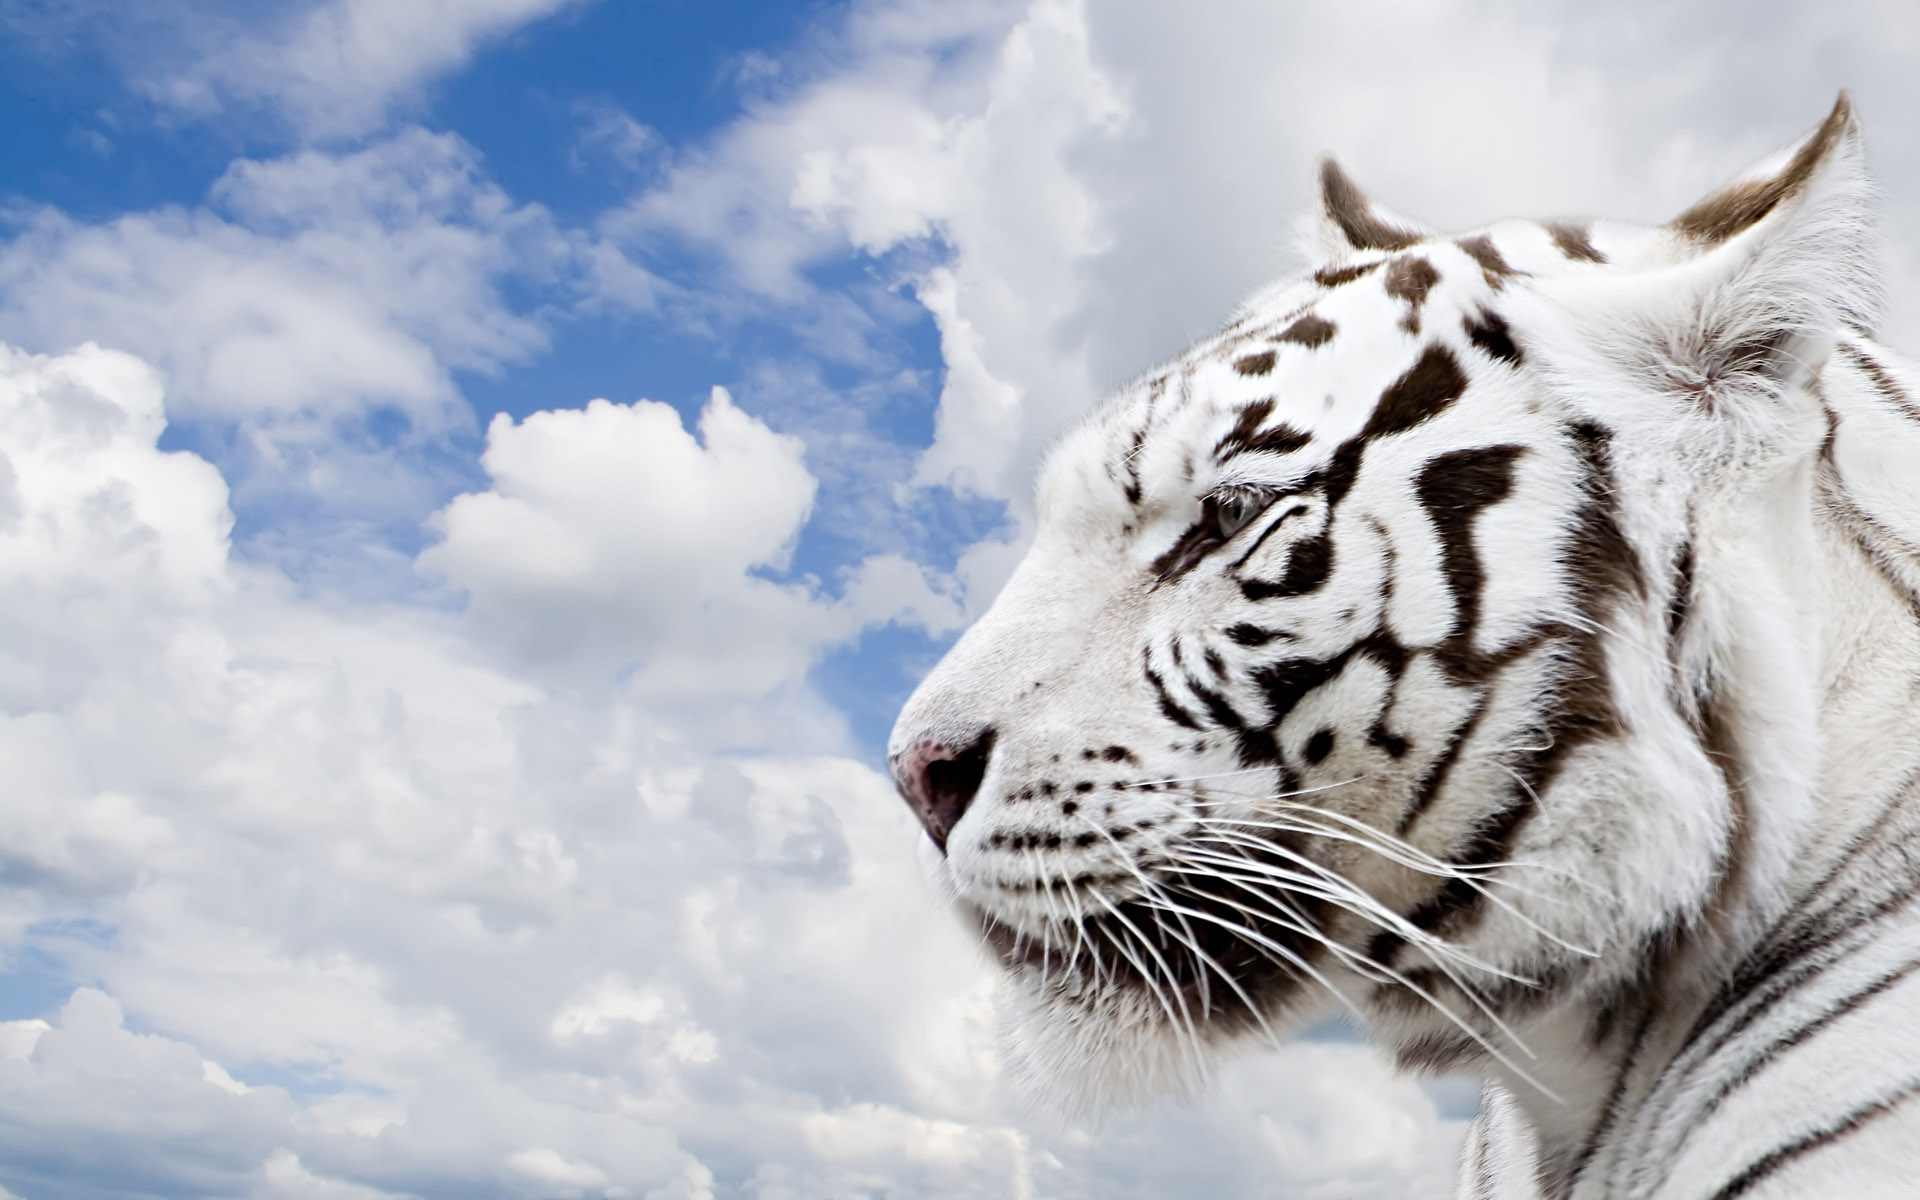 Tiger Animal 3D  Free photo on Pixabay  Pixabay